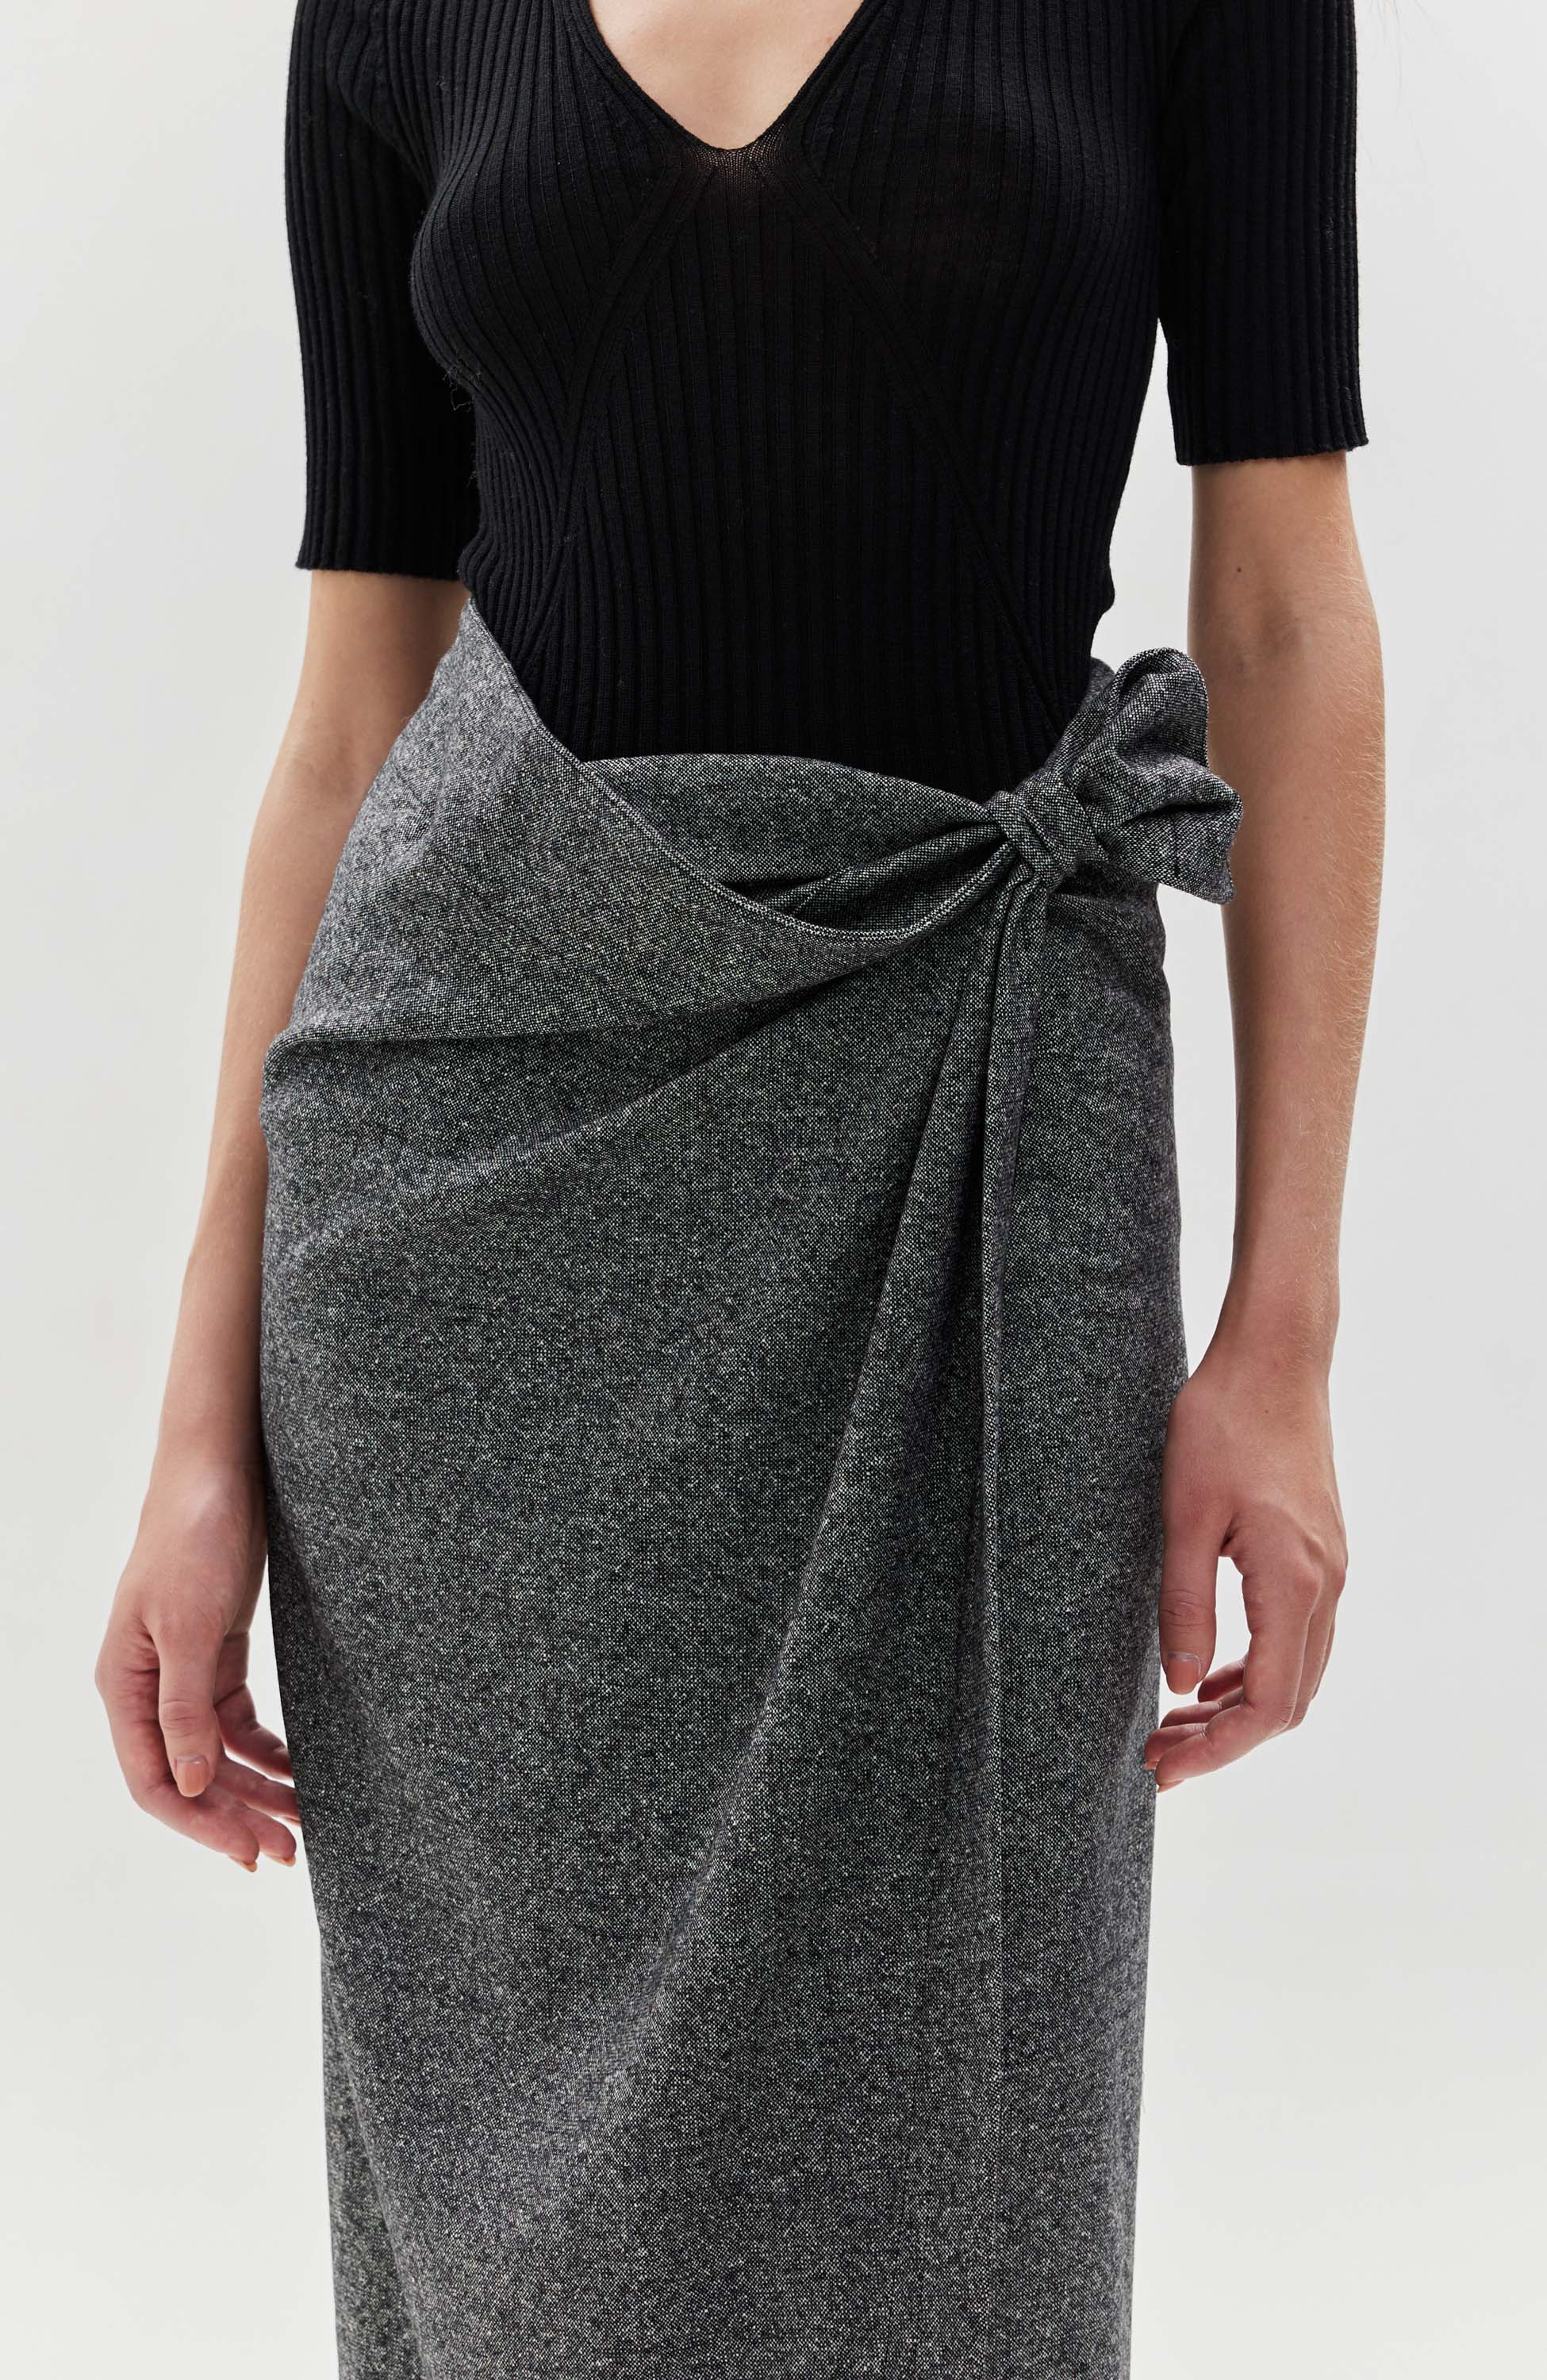 Flannel wrap skirt